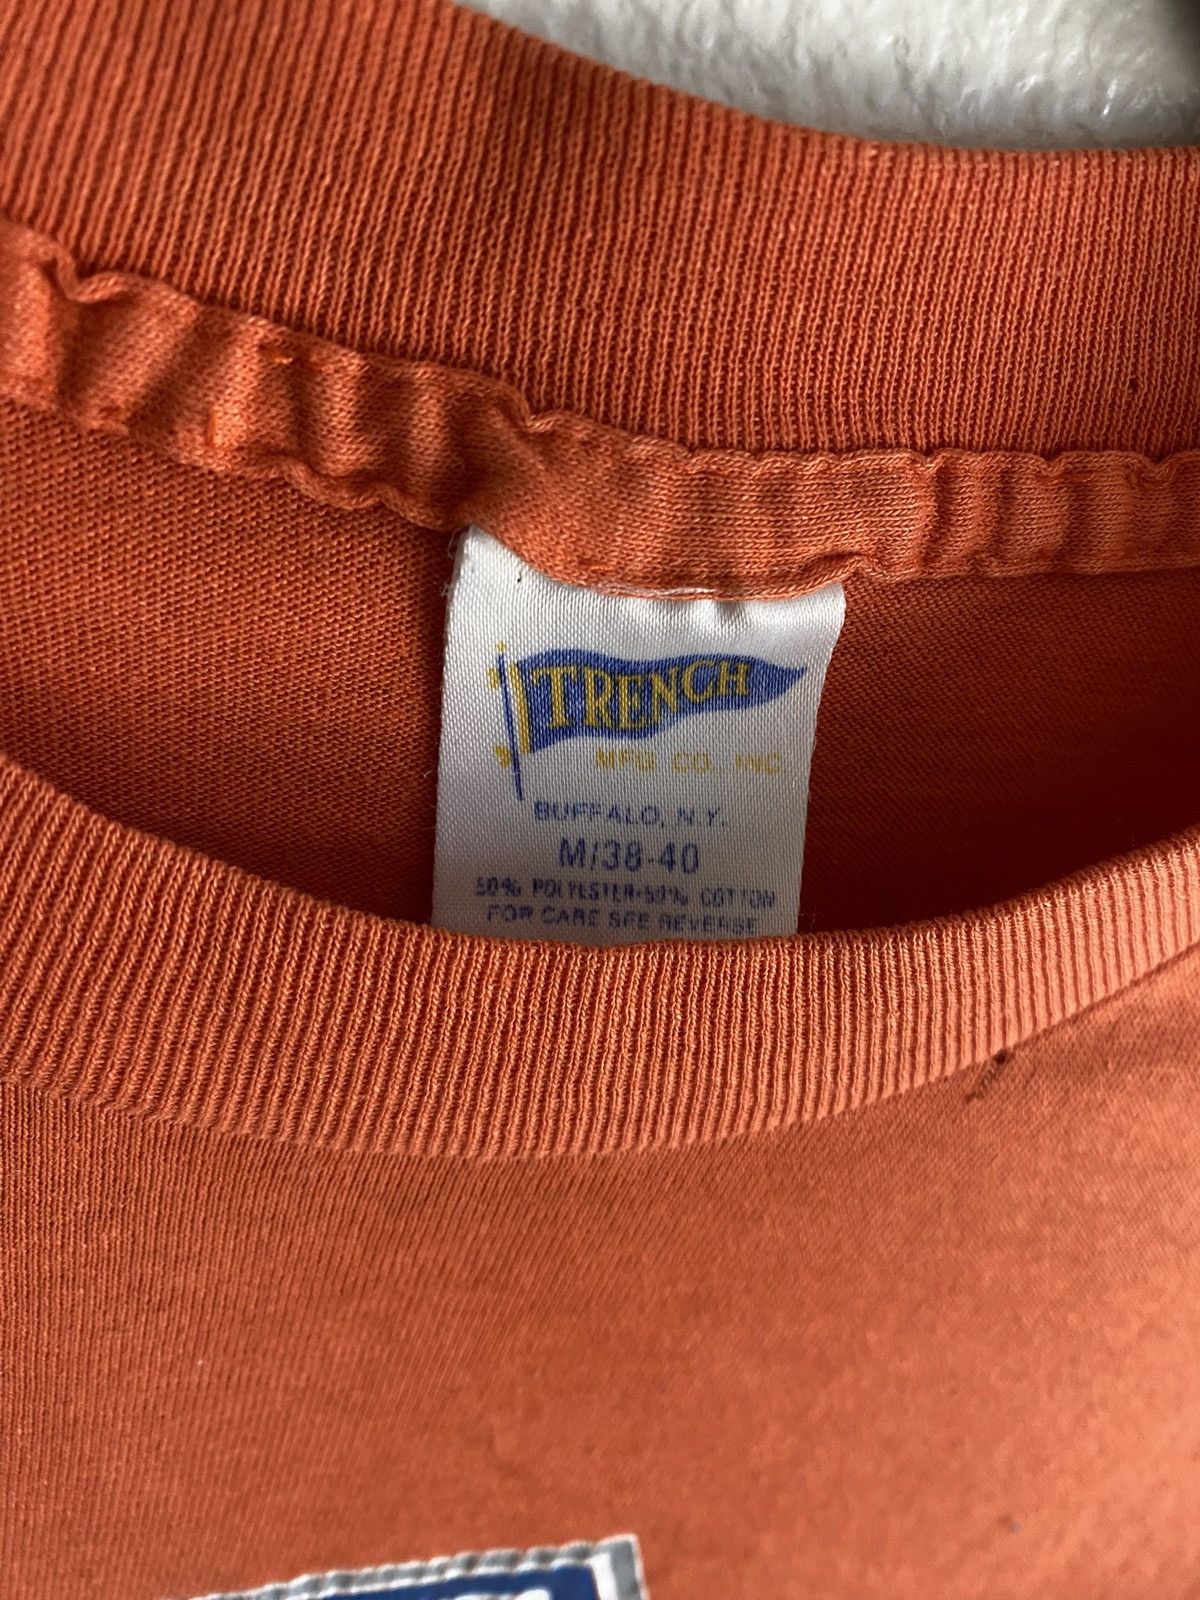 Vintage Vintage 1989 Denver Broncos Trench T-Shirt - Medium Size US M / EU 48-50 / 2 - 2 Preview